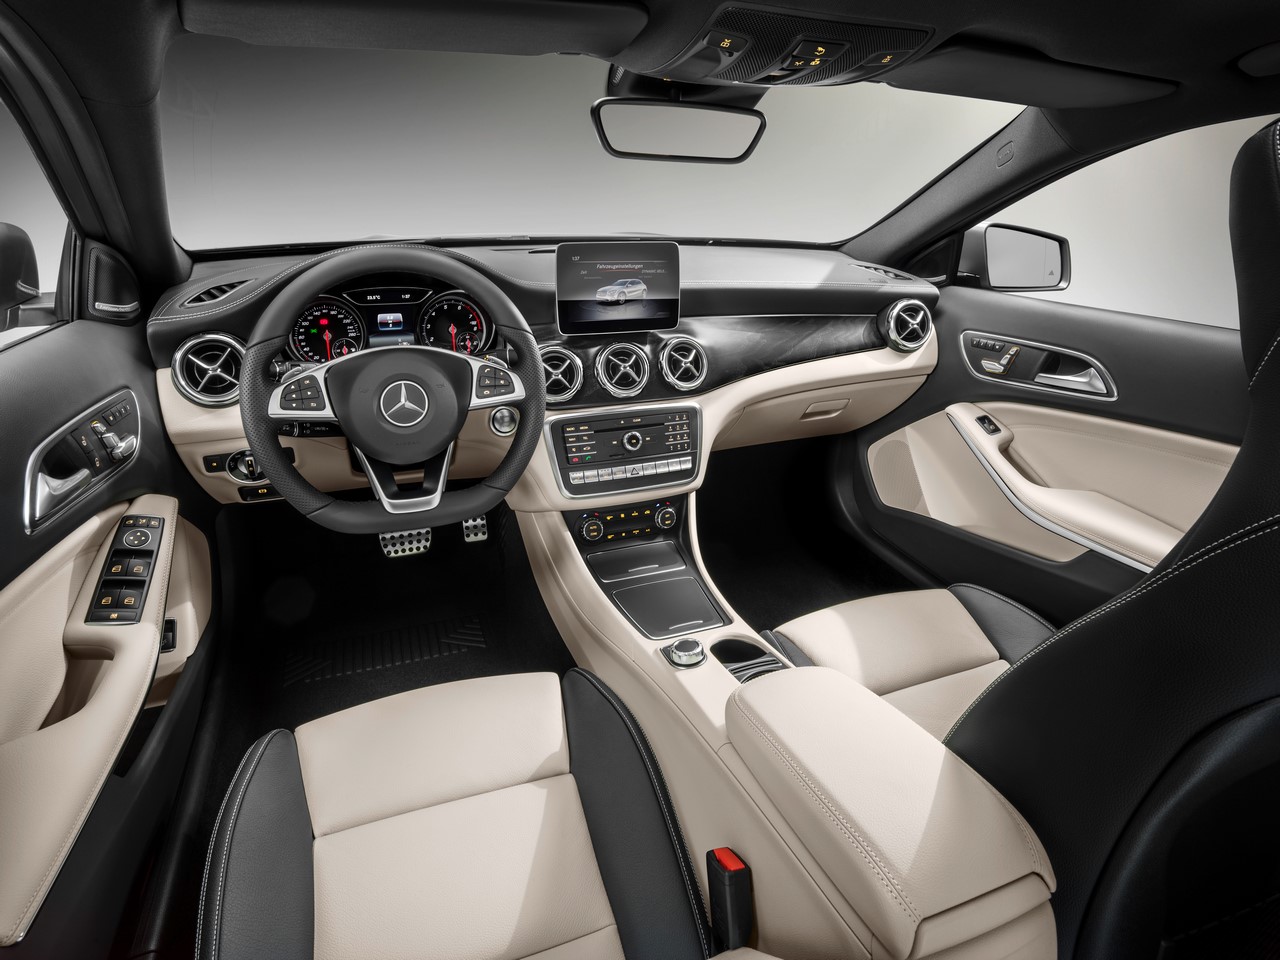 2017 Mercedes GLA Class Revealed at Detroit Auto Show Interior Dashboard Profile`